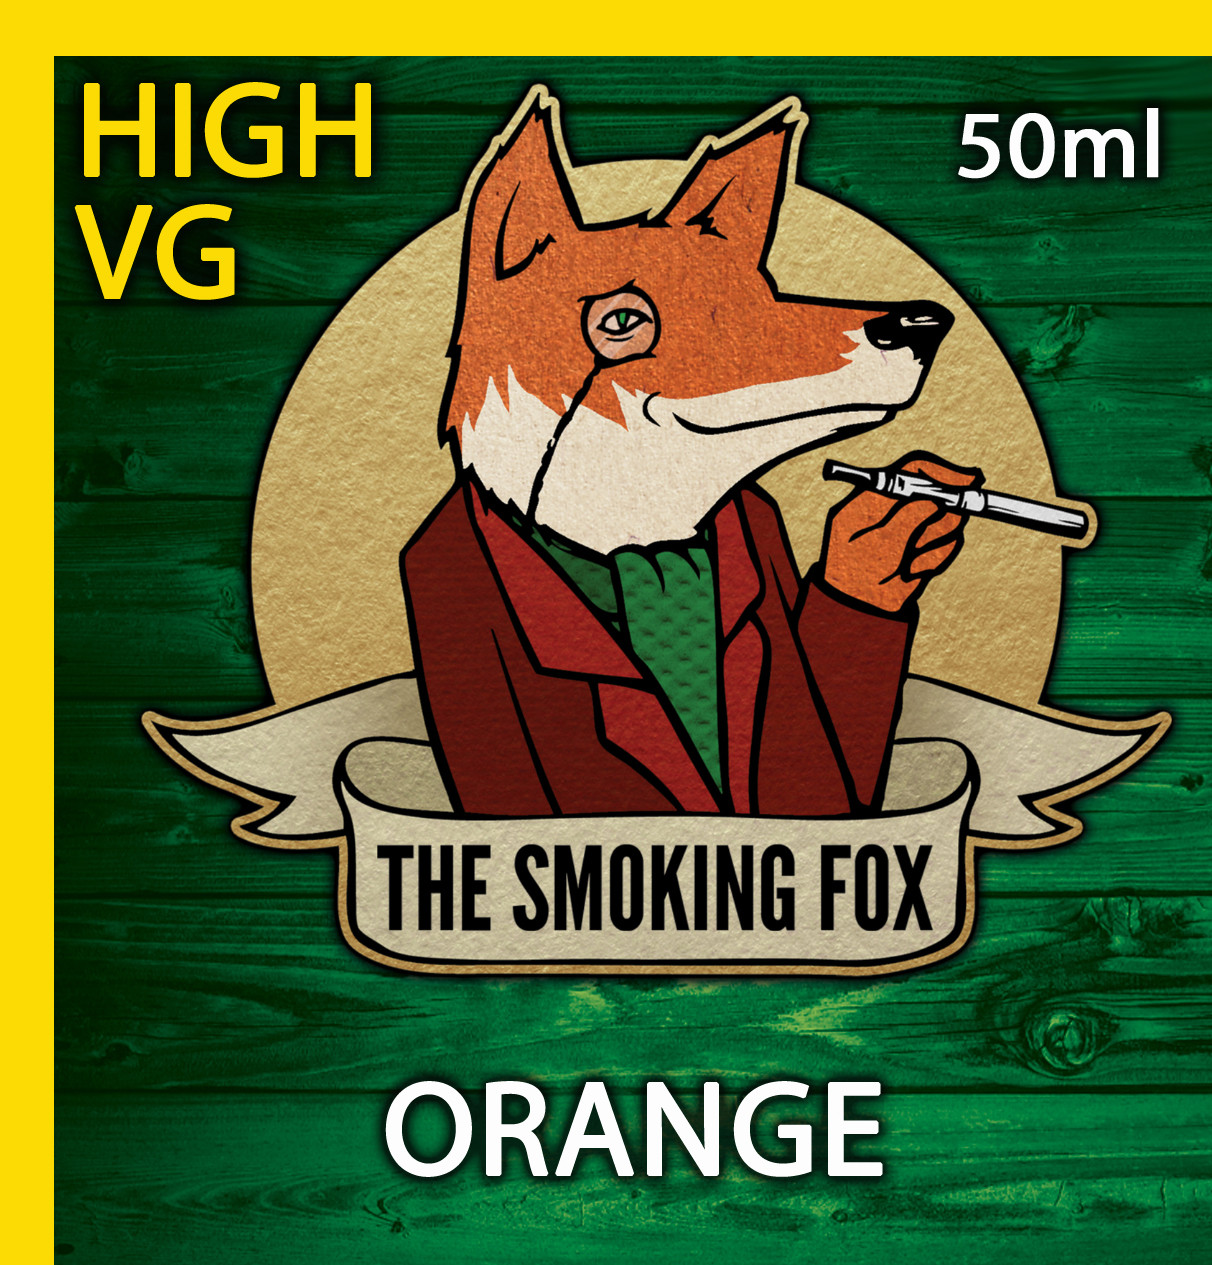 THE SMOKING FOX 50ml HIGH VG - ORANGE